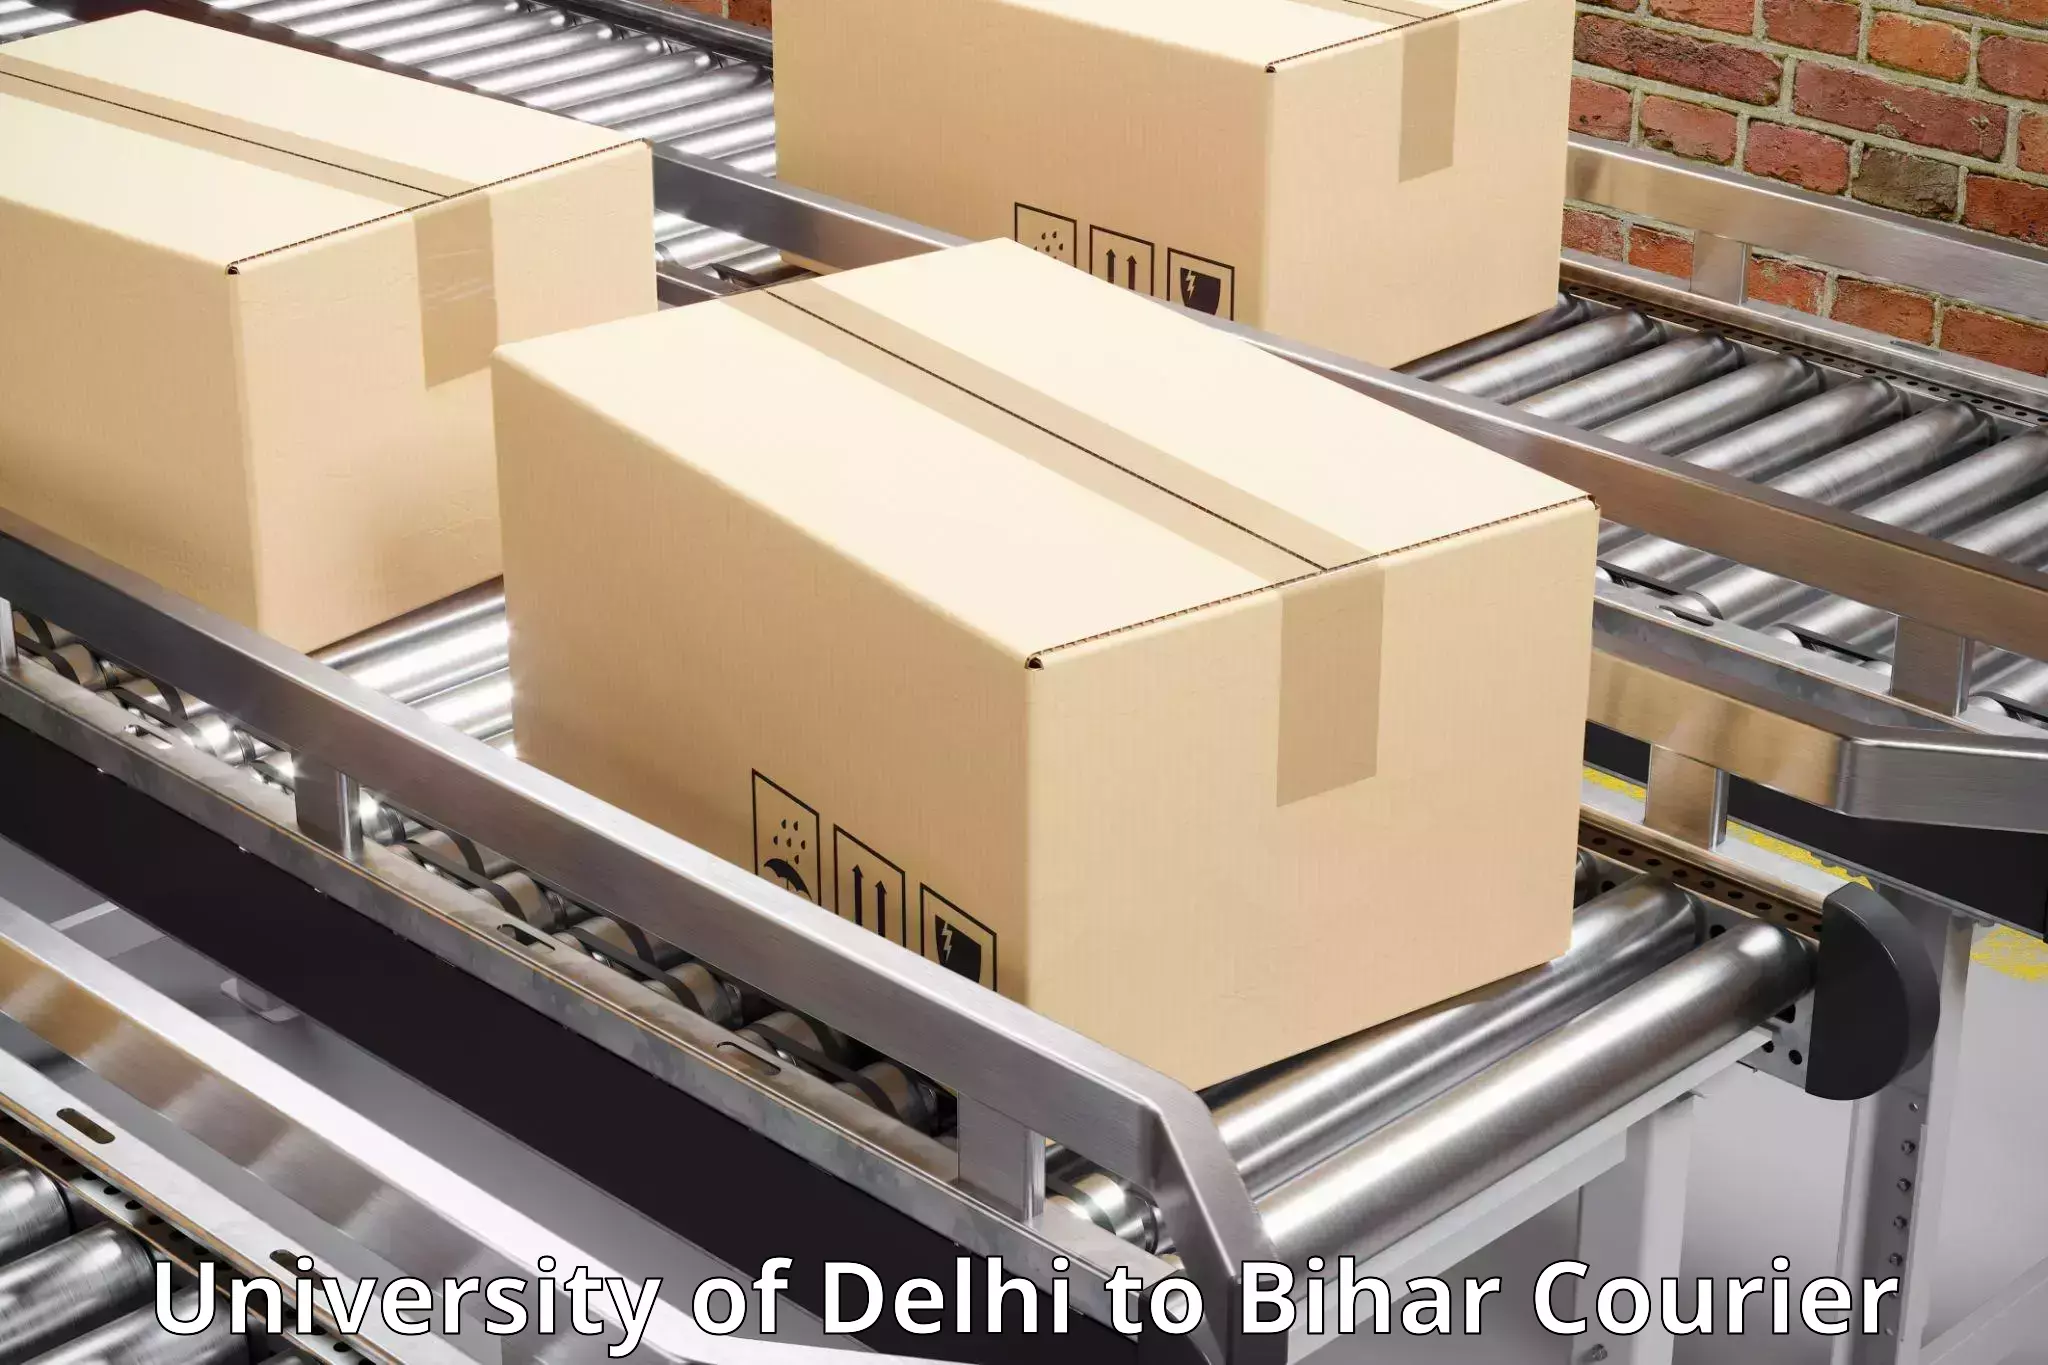 Courier service innovation in University of Delhi to Bihar